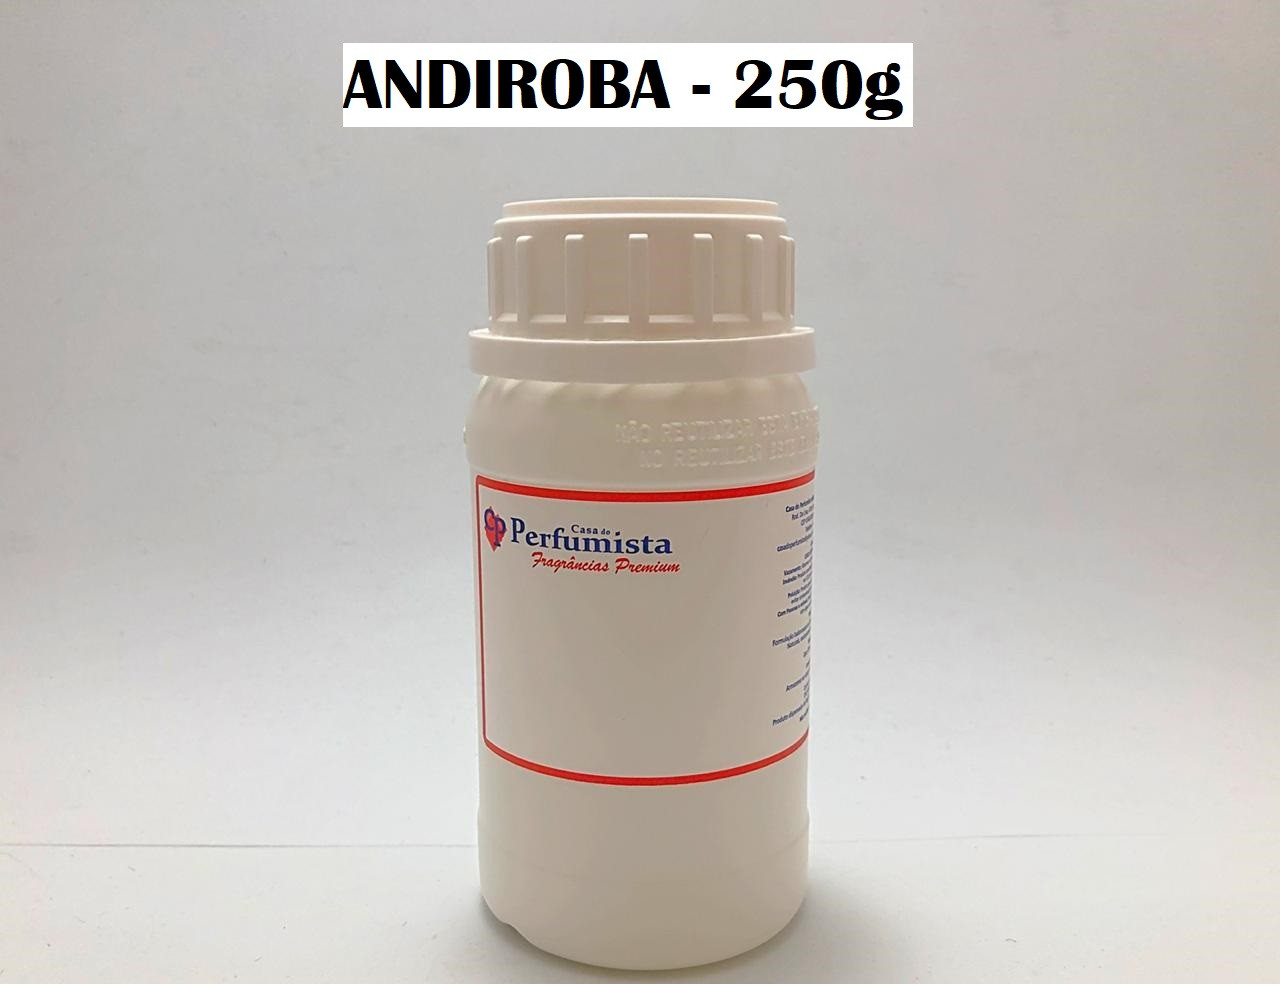 ANDIROBA - 250g